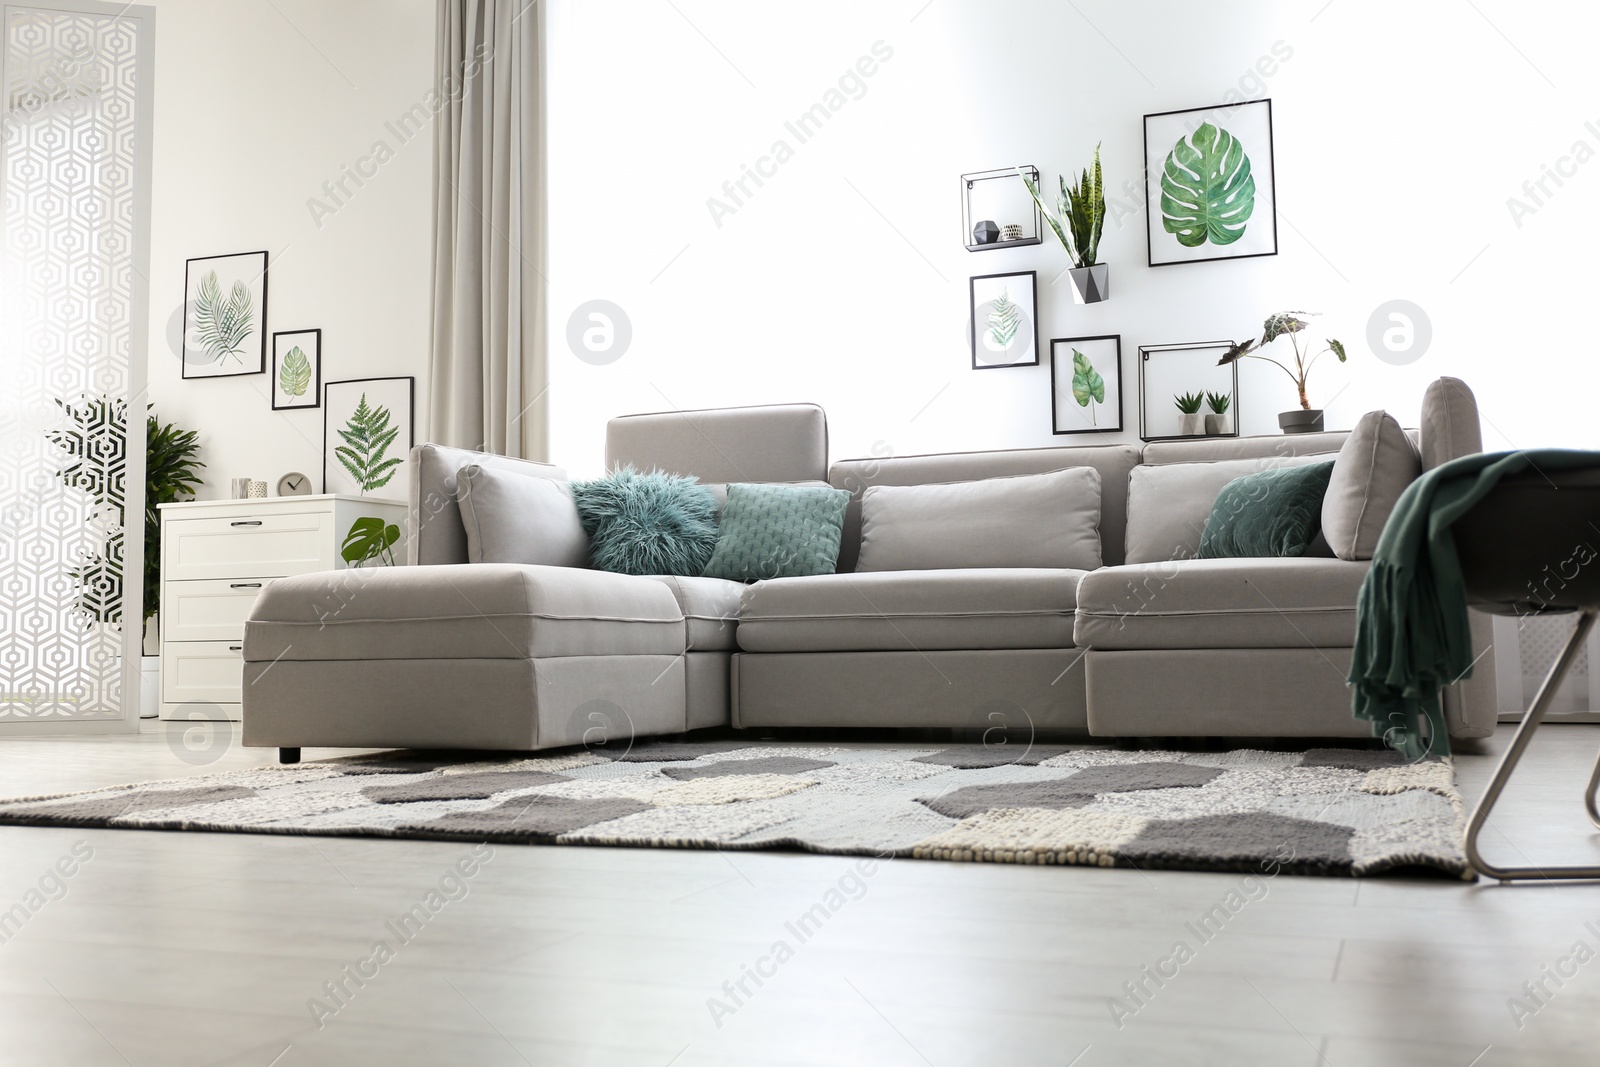 Photo of Comfortable large sofa in light room. Interior design